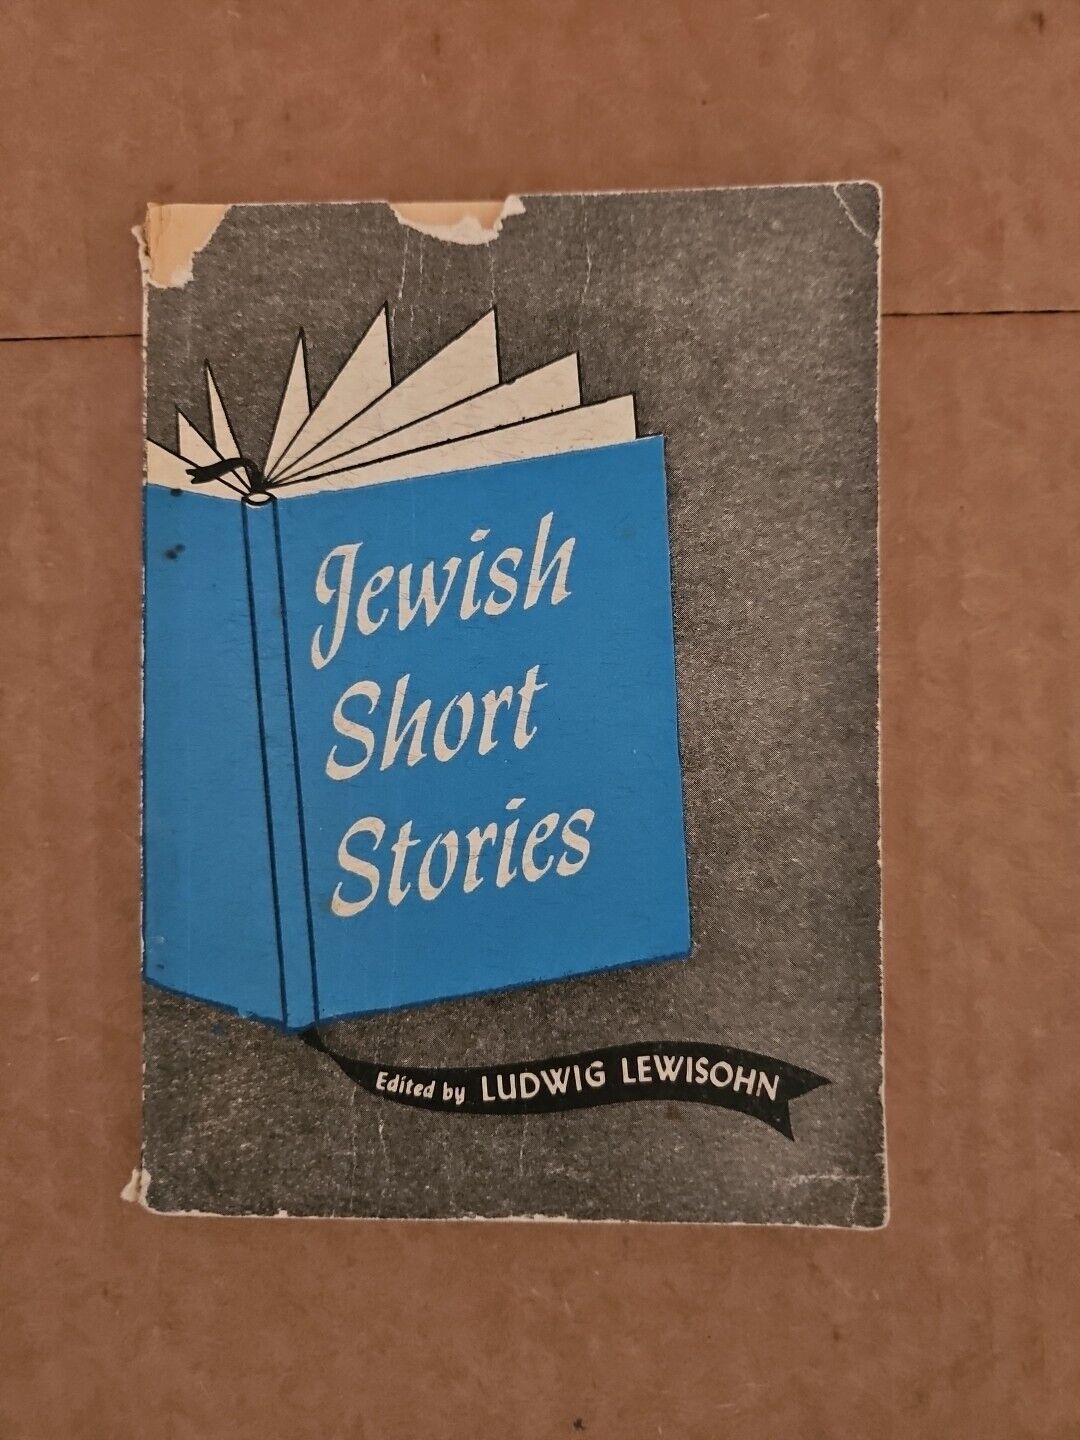 JEWISH SHORT STORIES 1945 By Ludwig Lewisohn